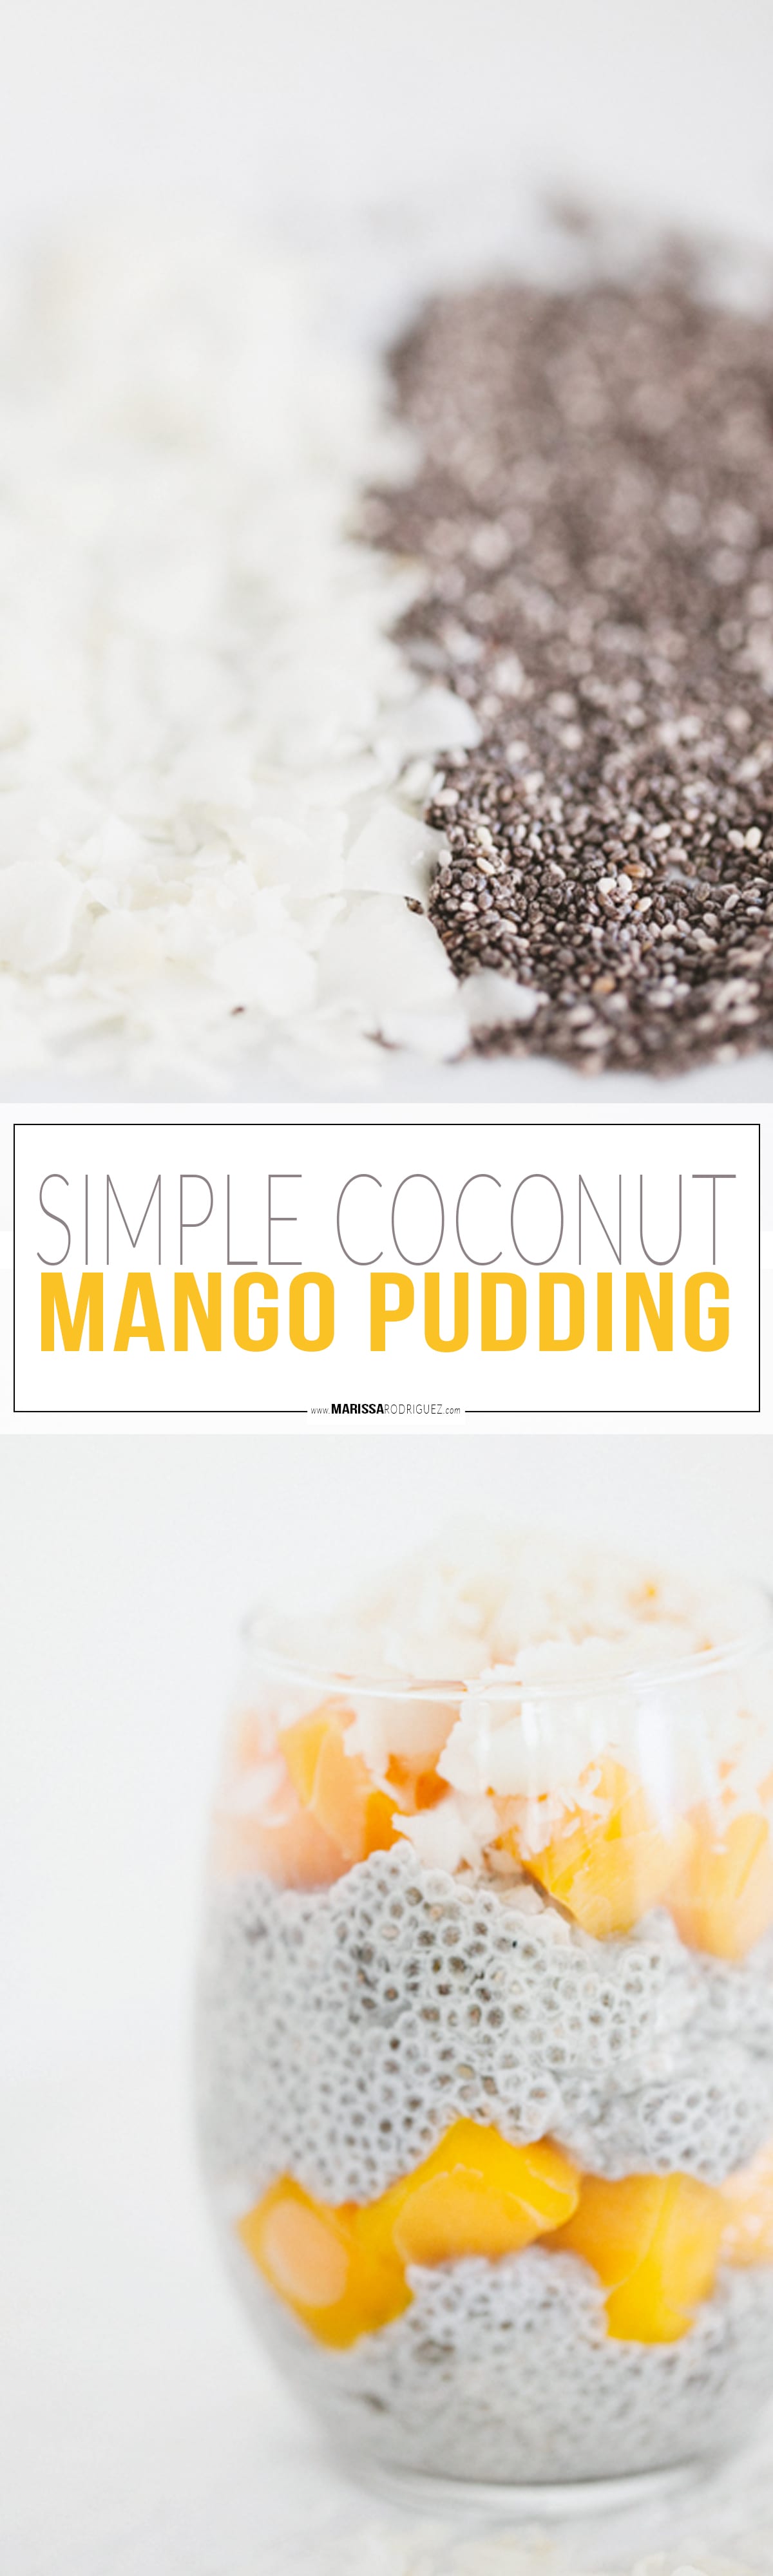 Simple coconut mango pudding